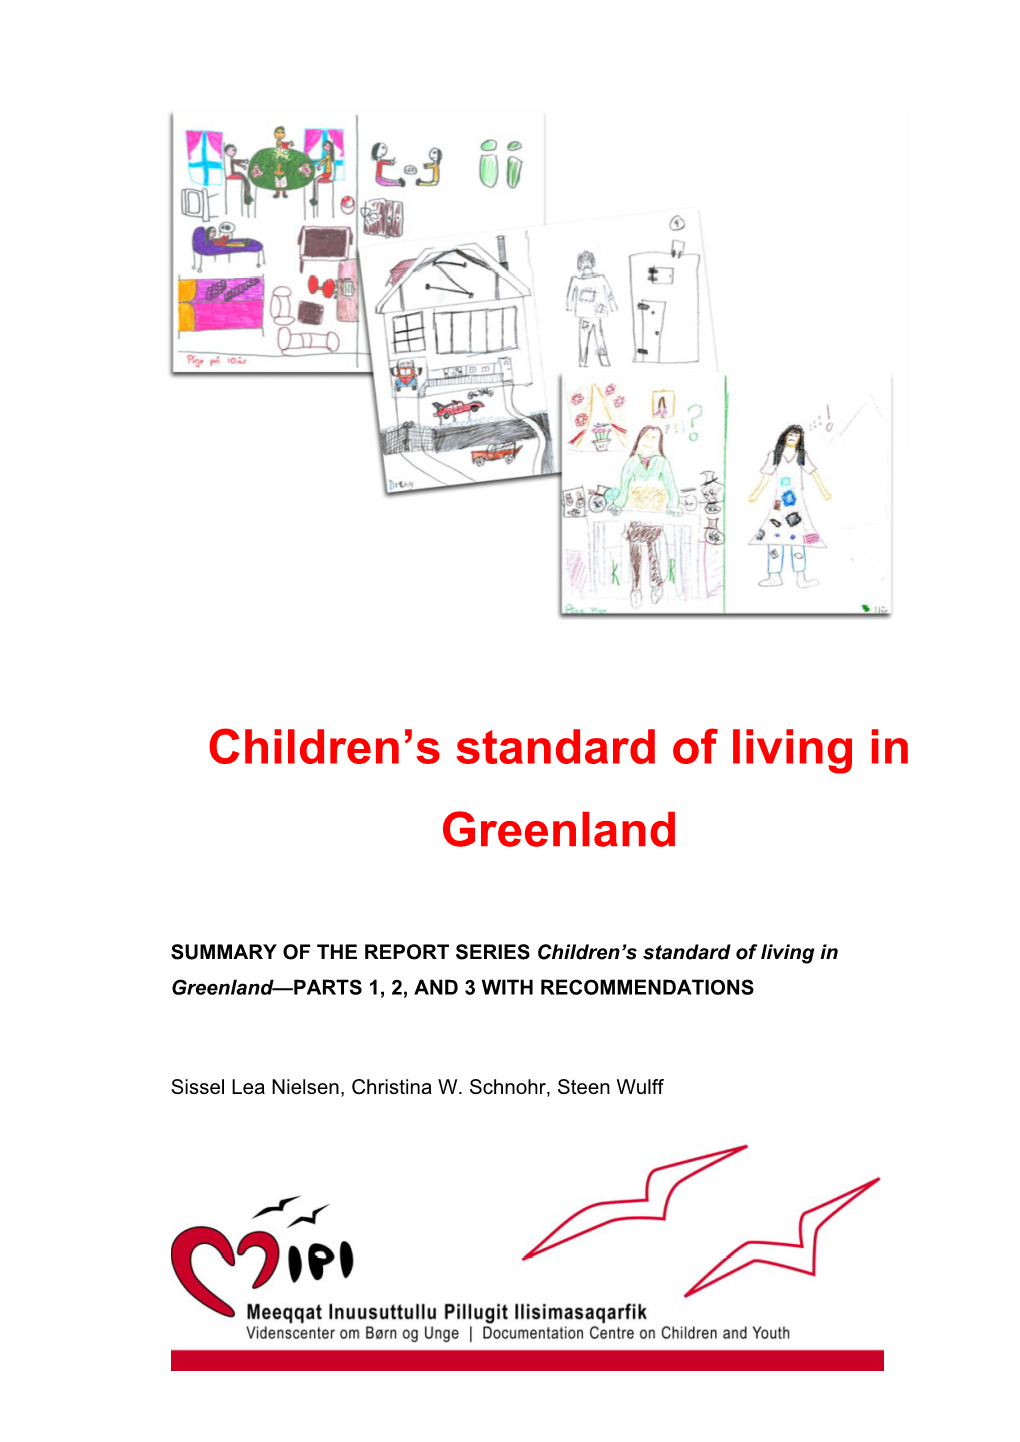 Children's Standard of Living in Greenland